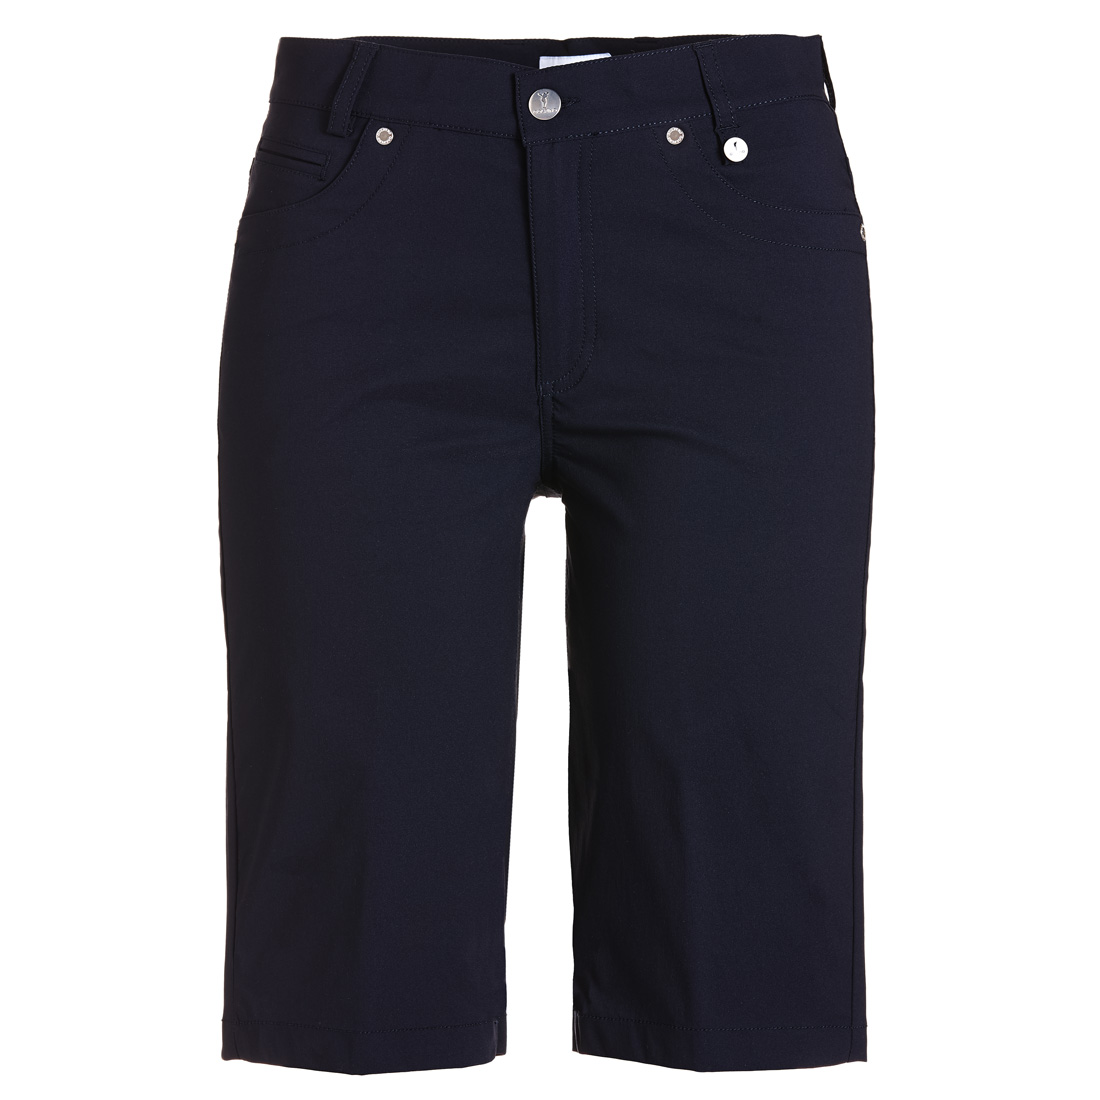 Airy ladies' five-pocket golf Bermuda shorts 